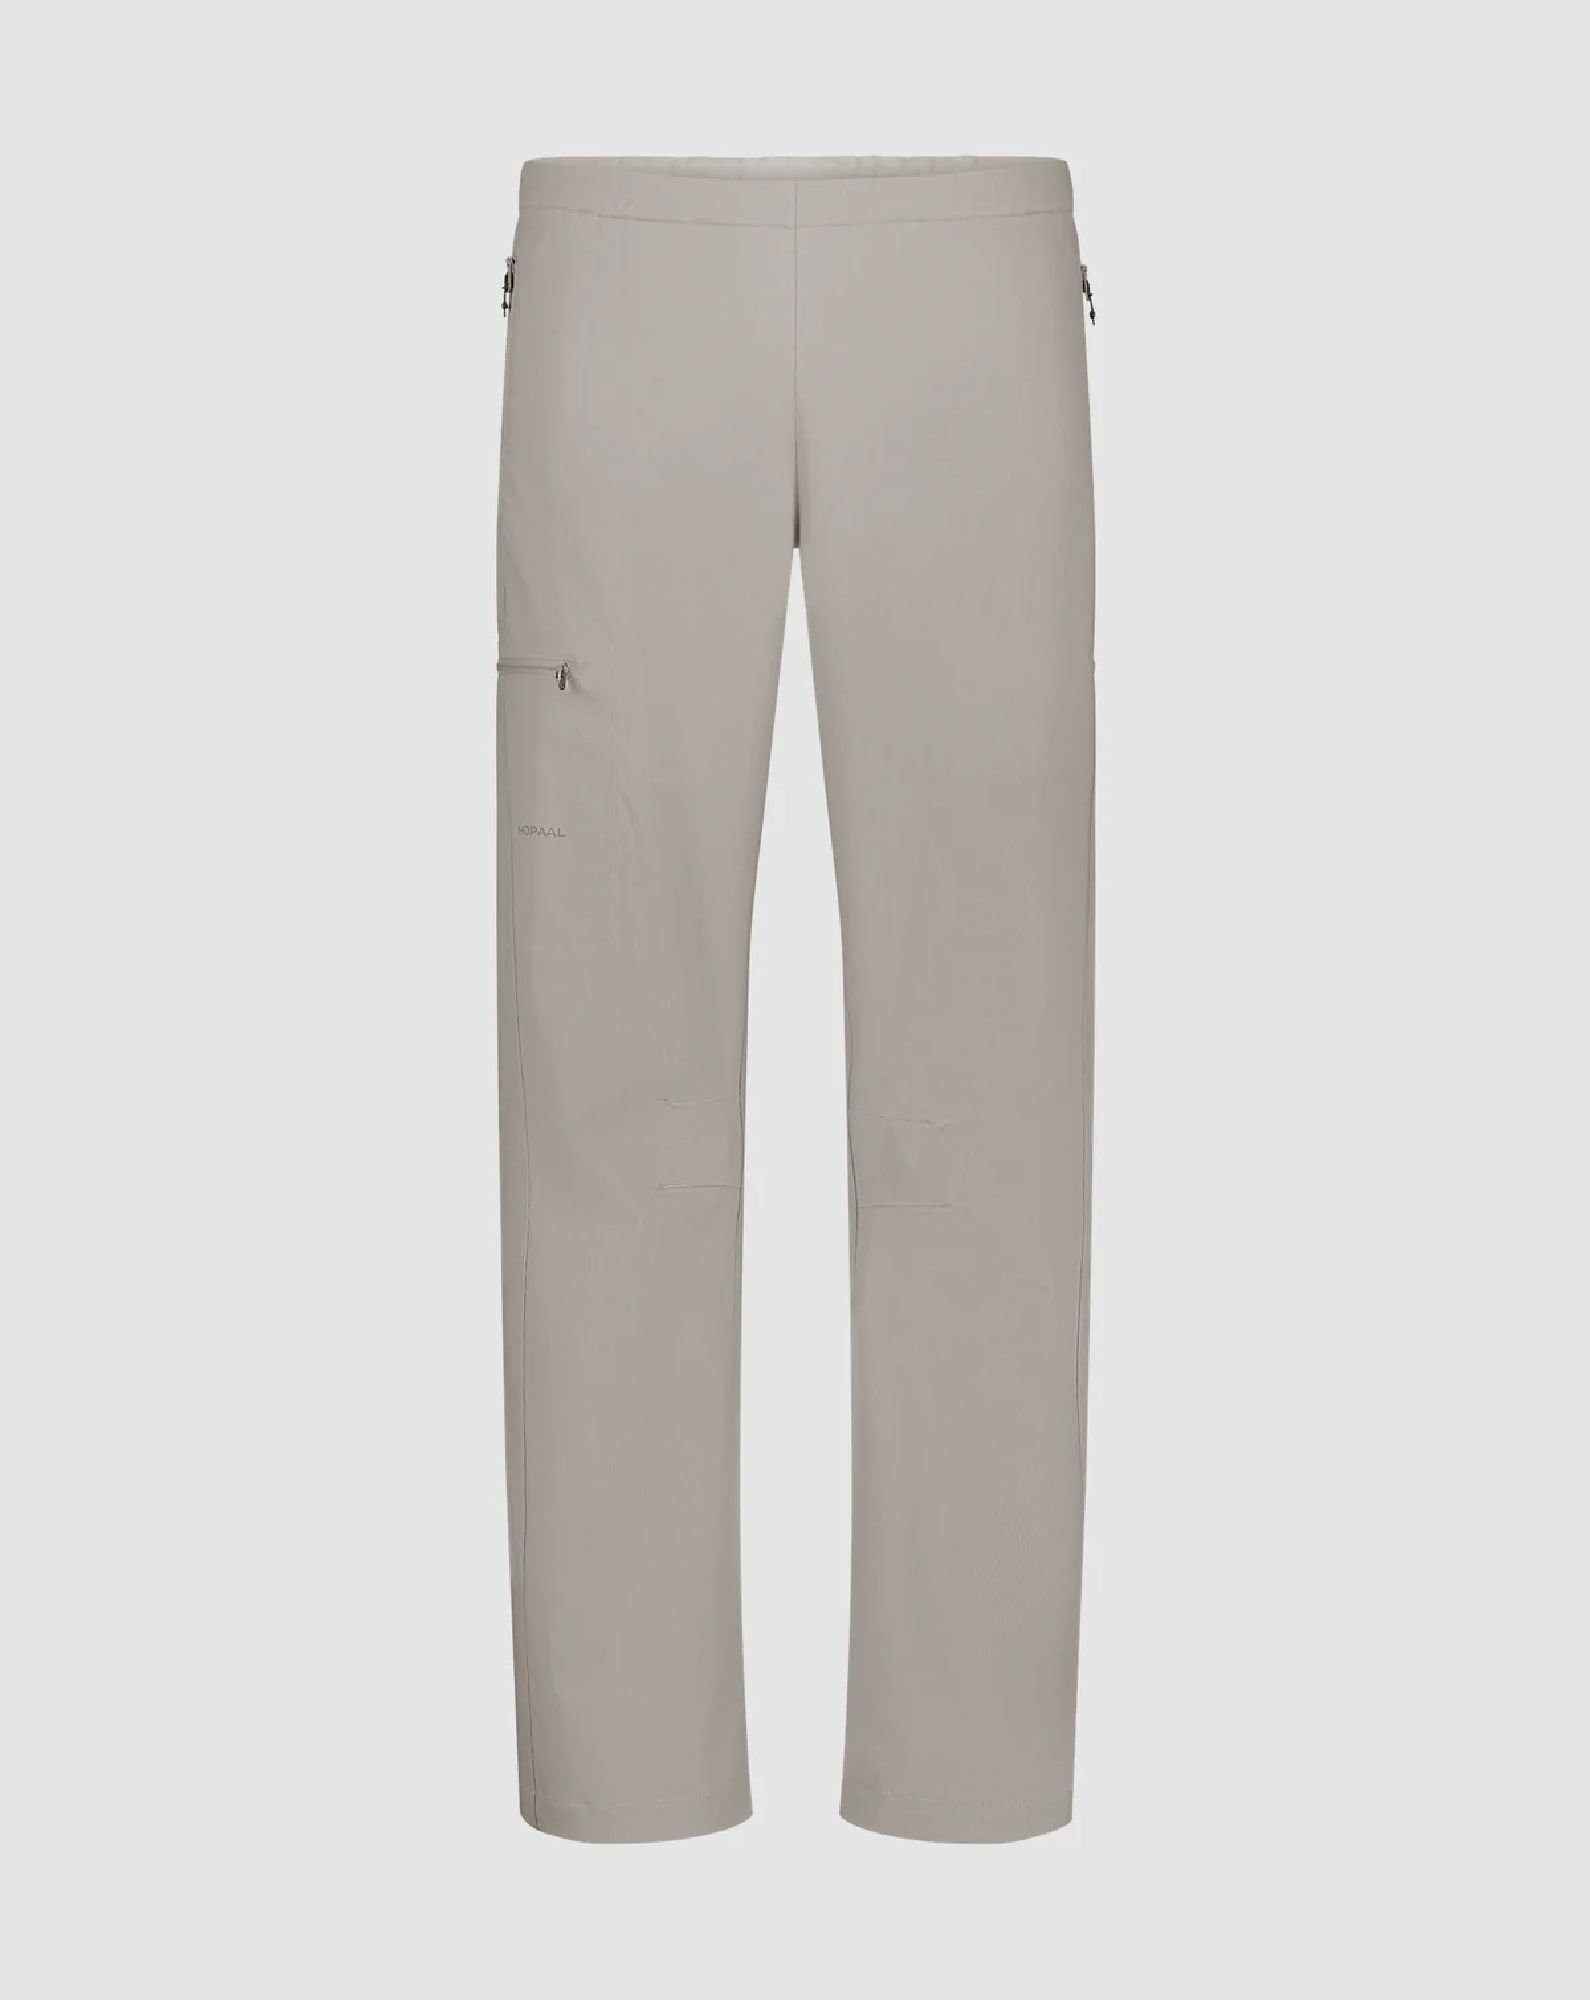 Hopaal Pantalon Multi-Activités - Walking trousers - Men's | Hardloop